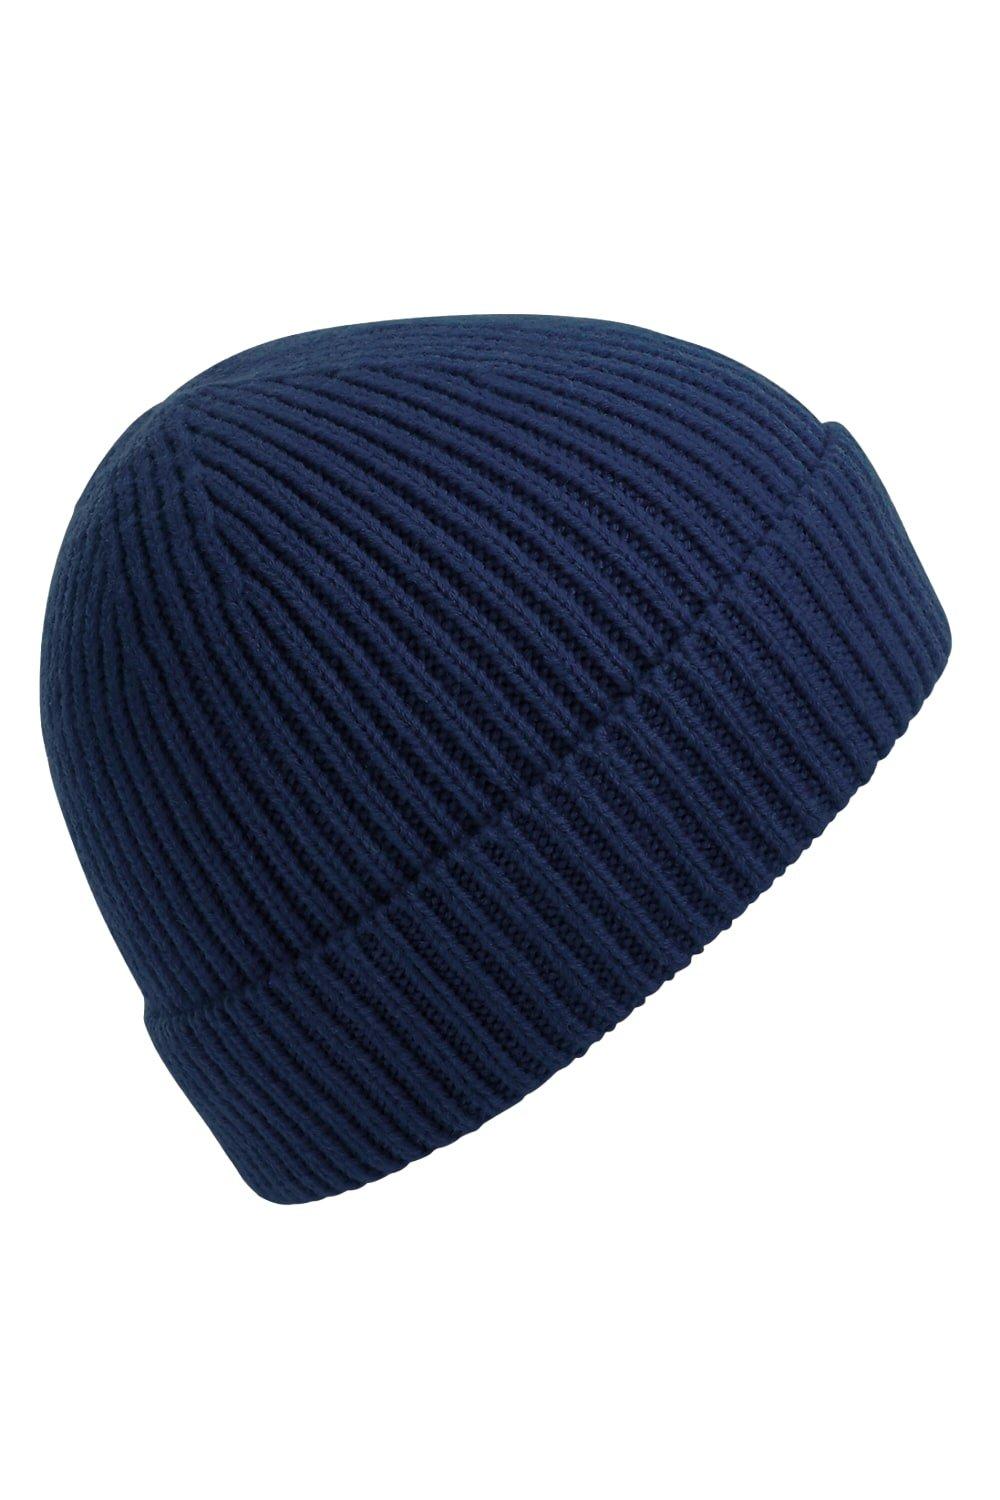 Вязаная шапка в рубчик Beechfield, темно-синий